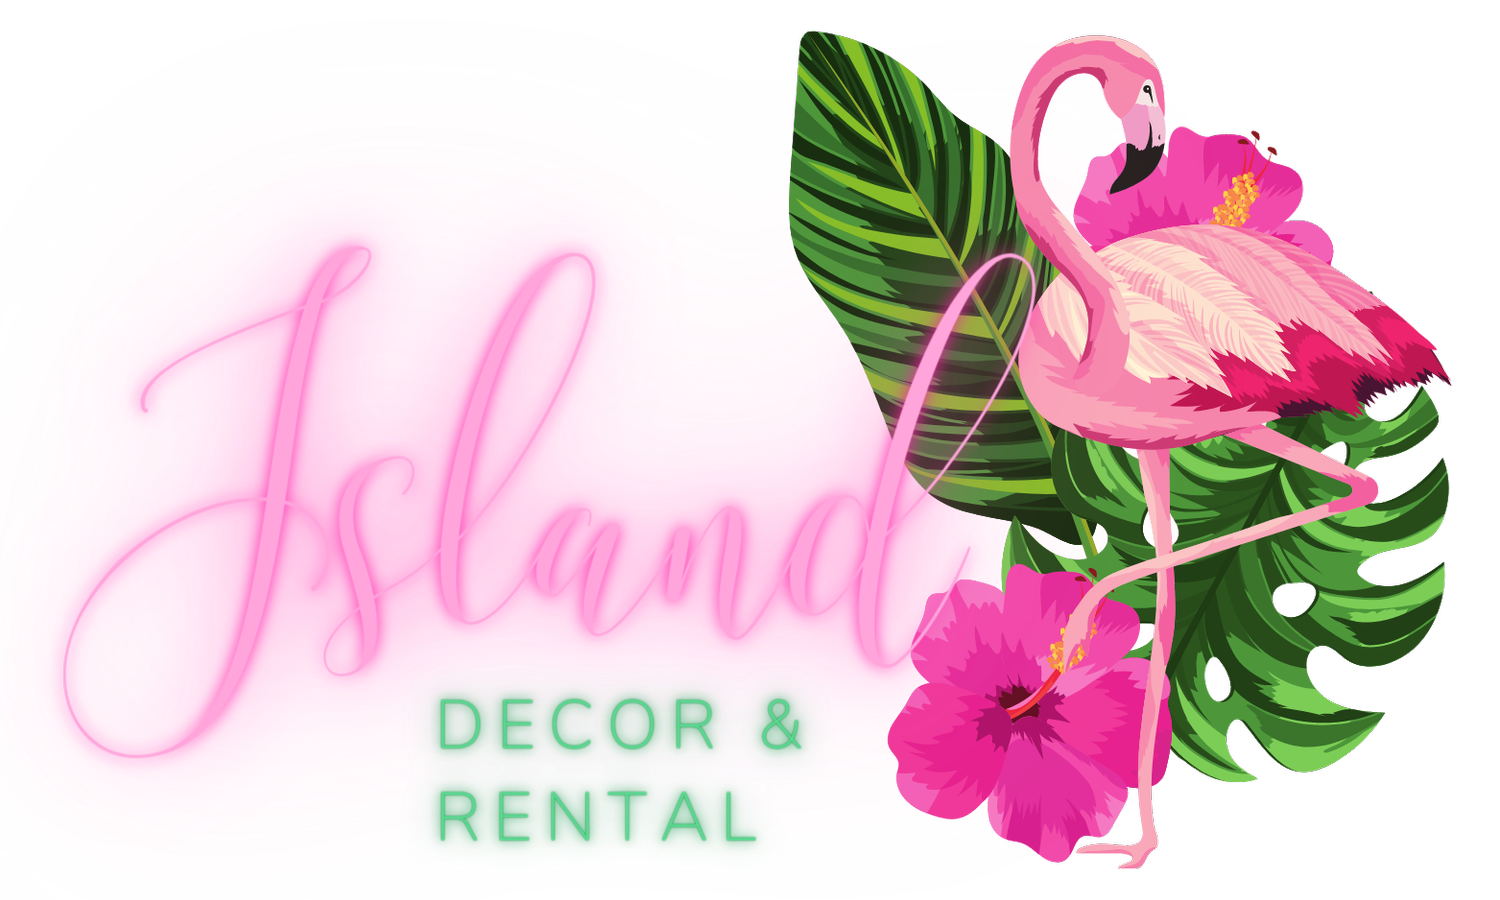 Island Decor and Rental